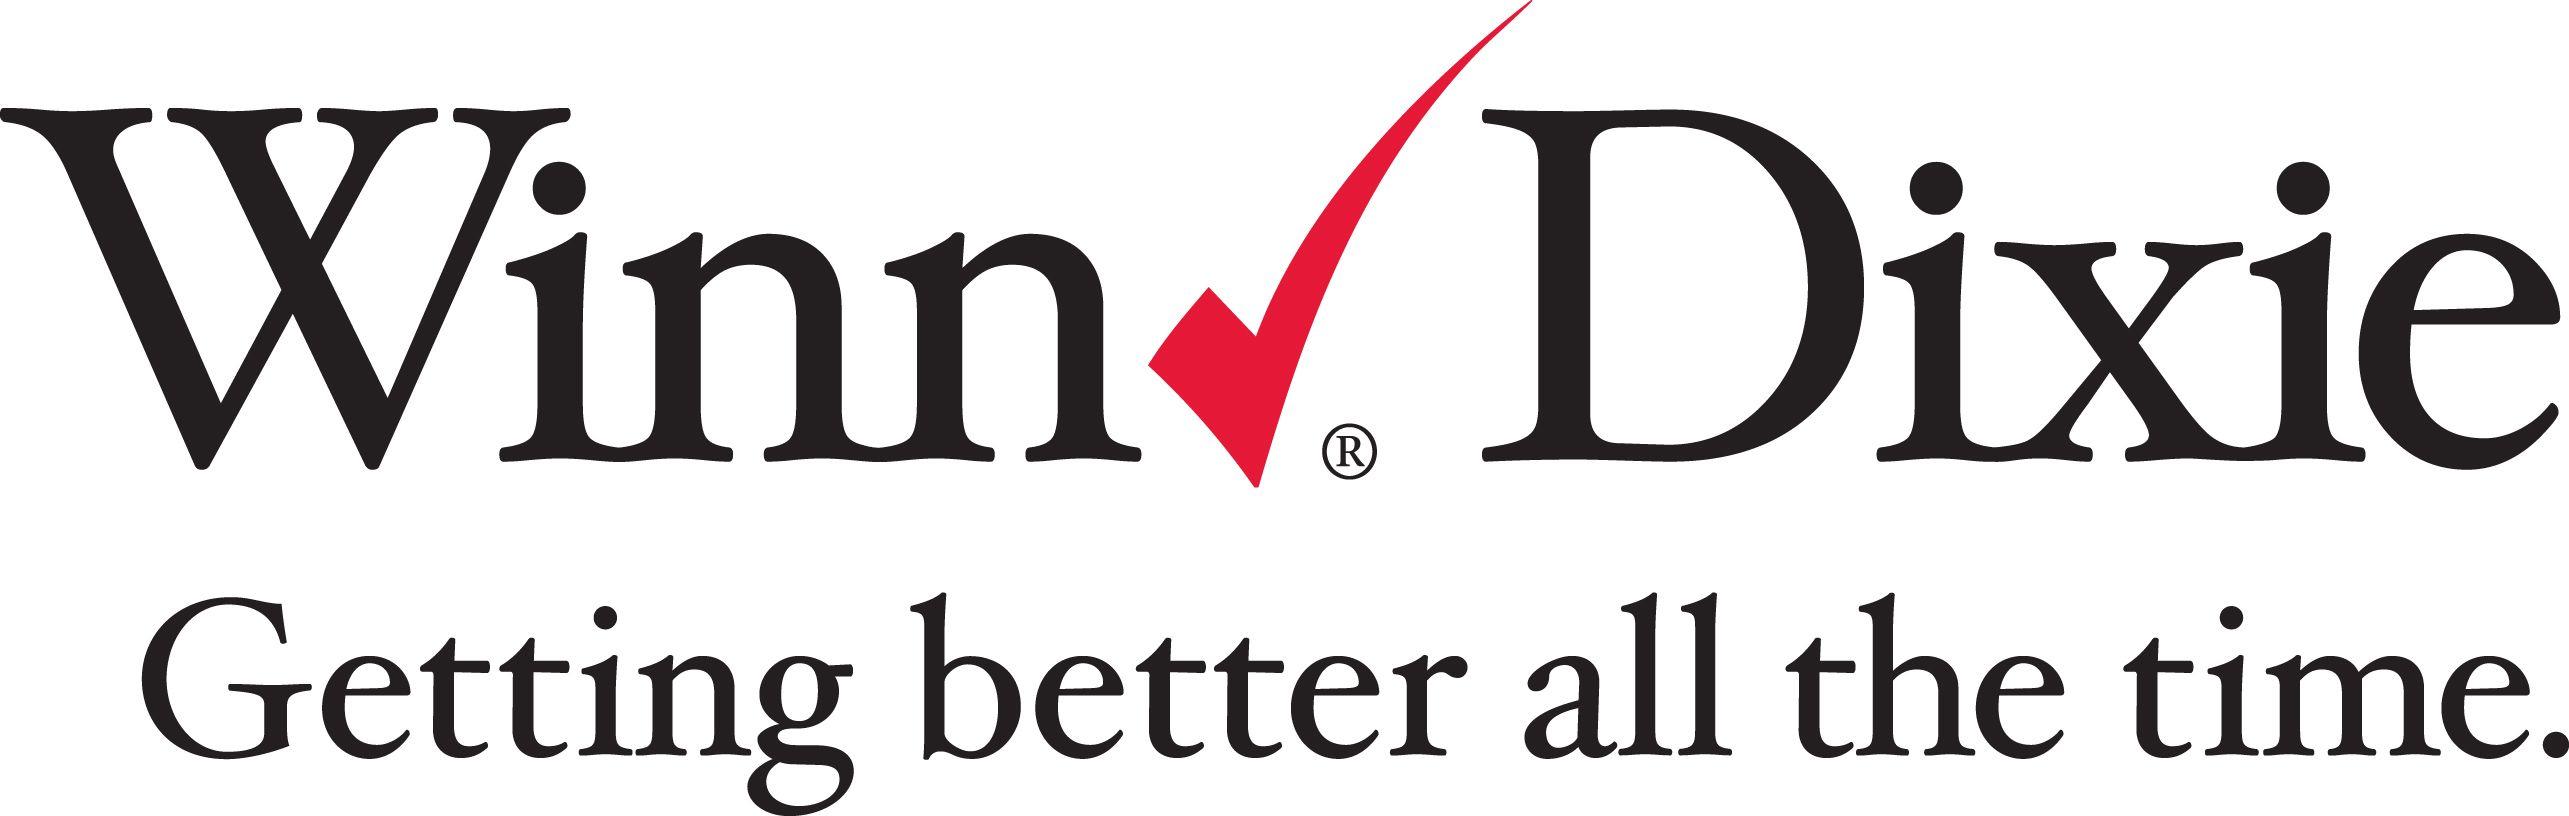 Winn-Dixie Logo - Winn dixie Logos